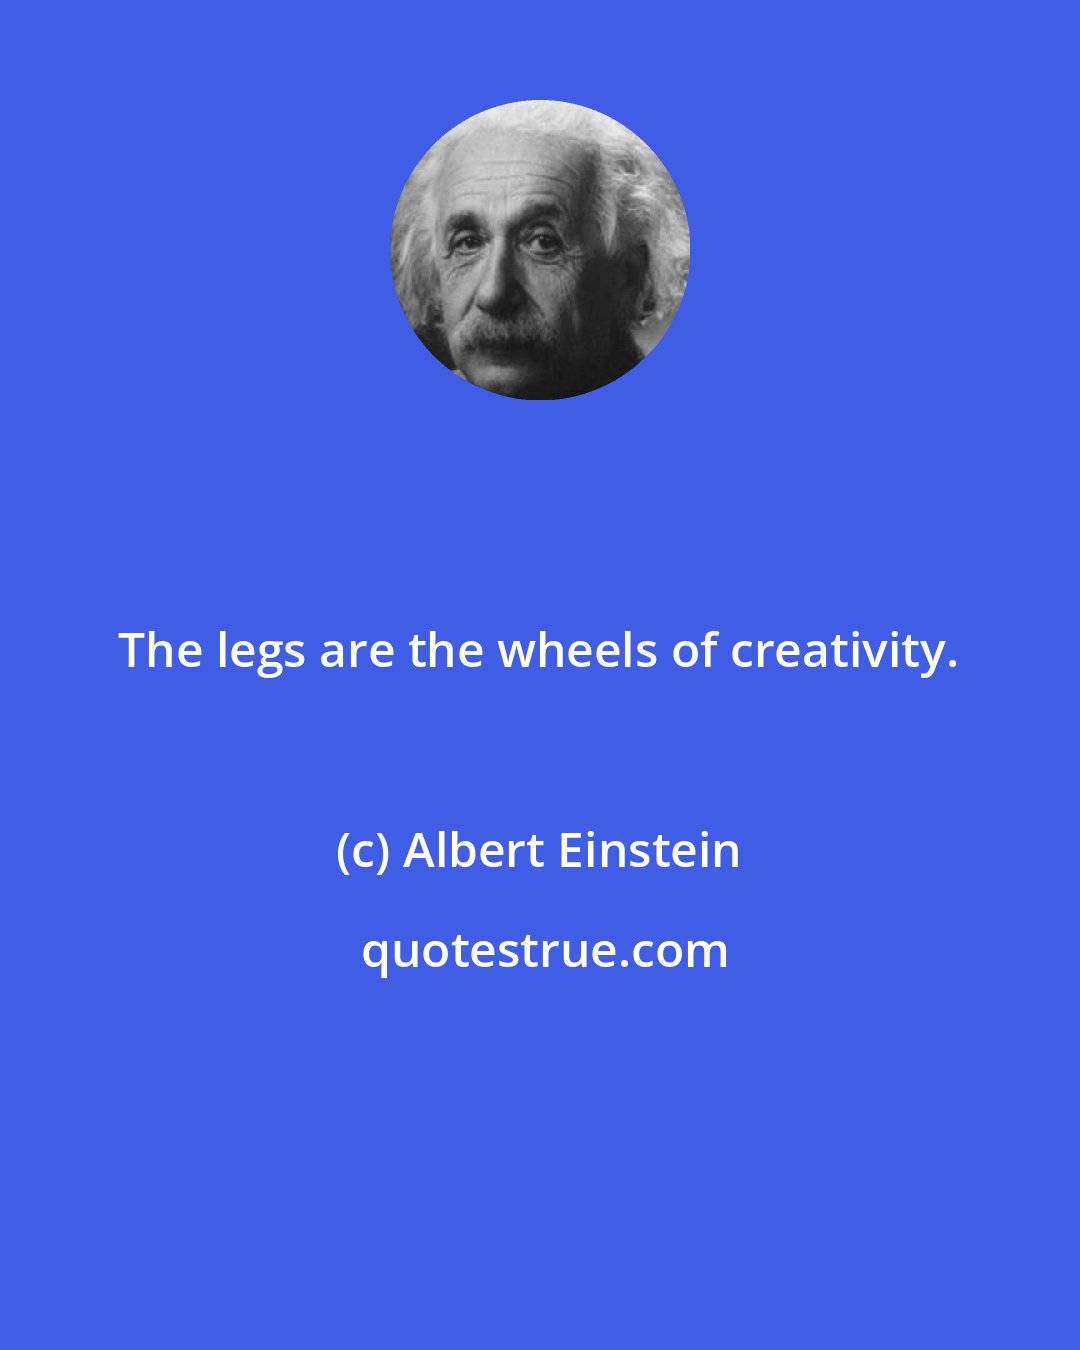 Albert Einstein: The legs are the wheels of creativity.